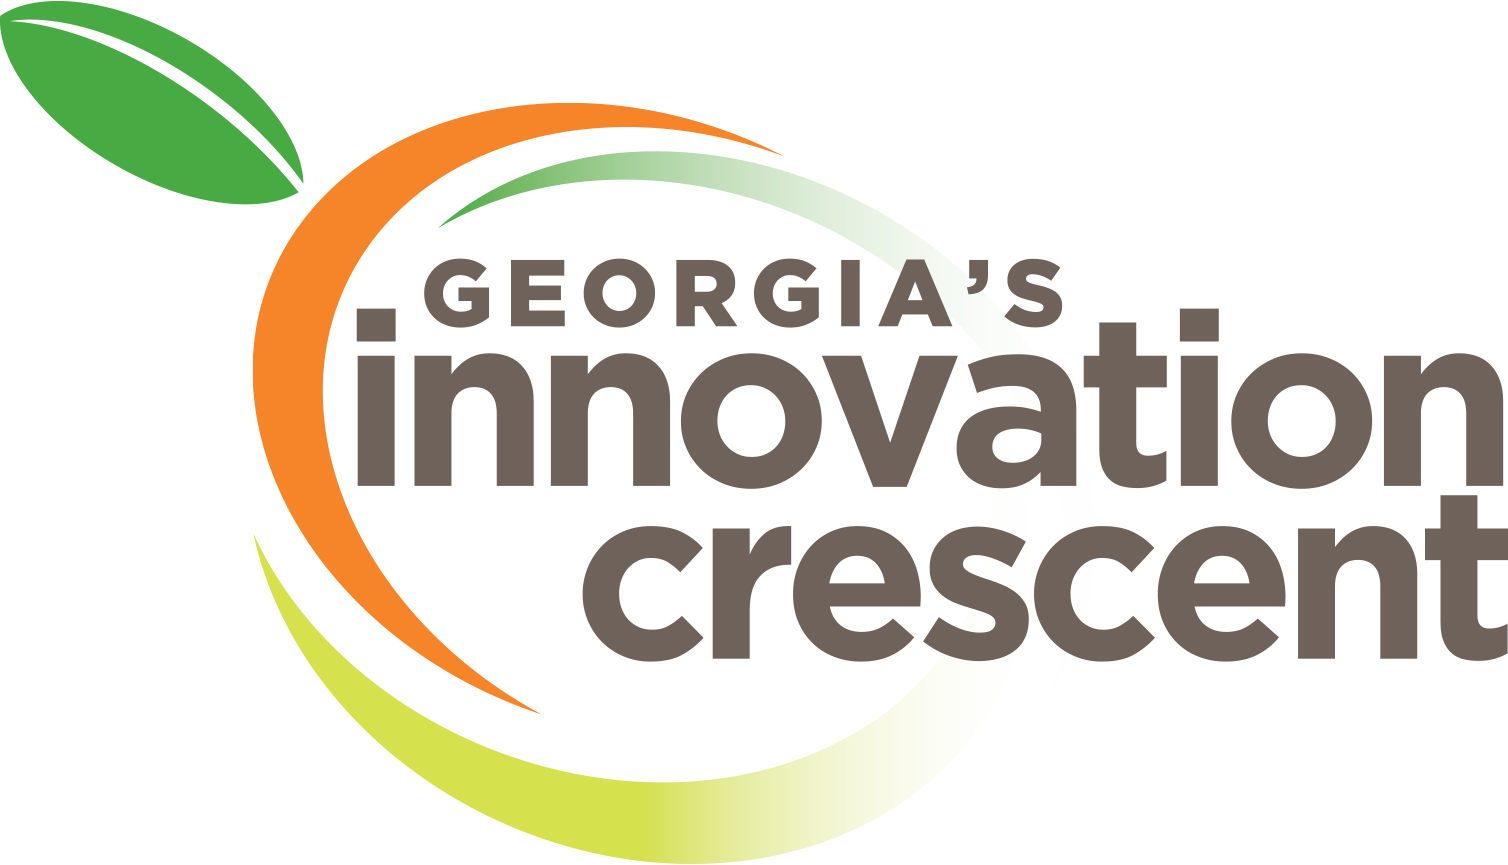 Georgia’s Innovation Crescent Regional Partnership